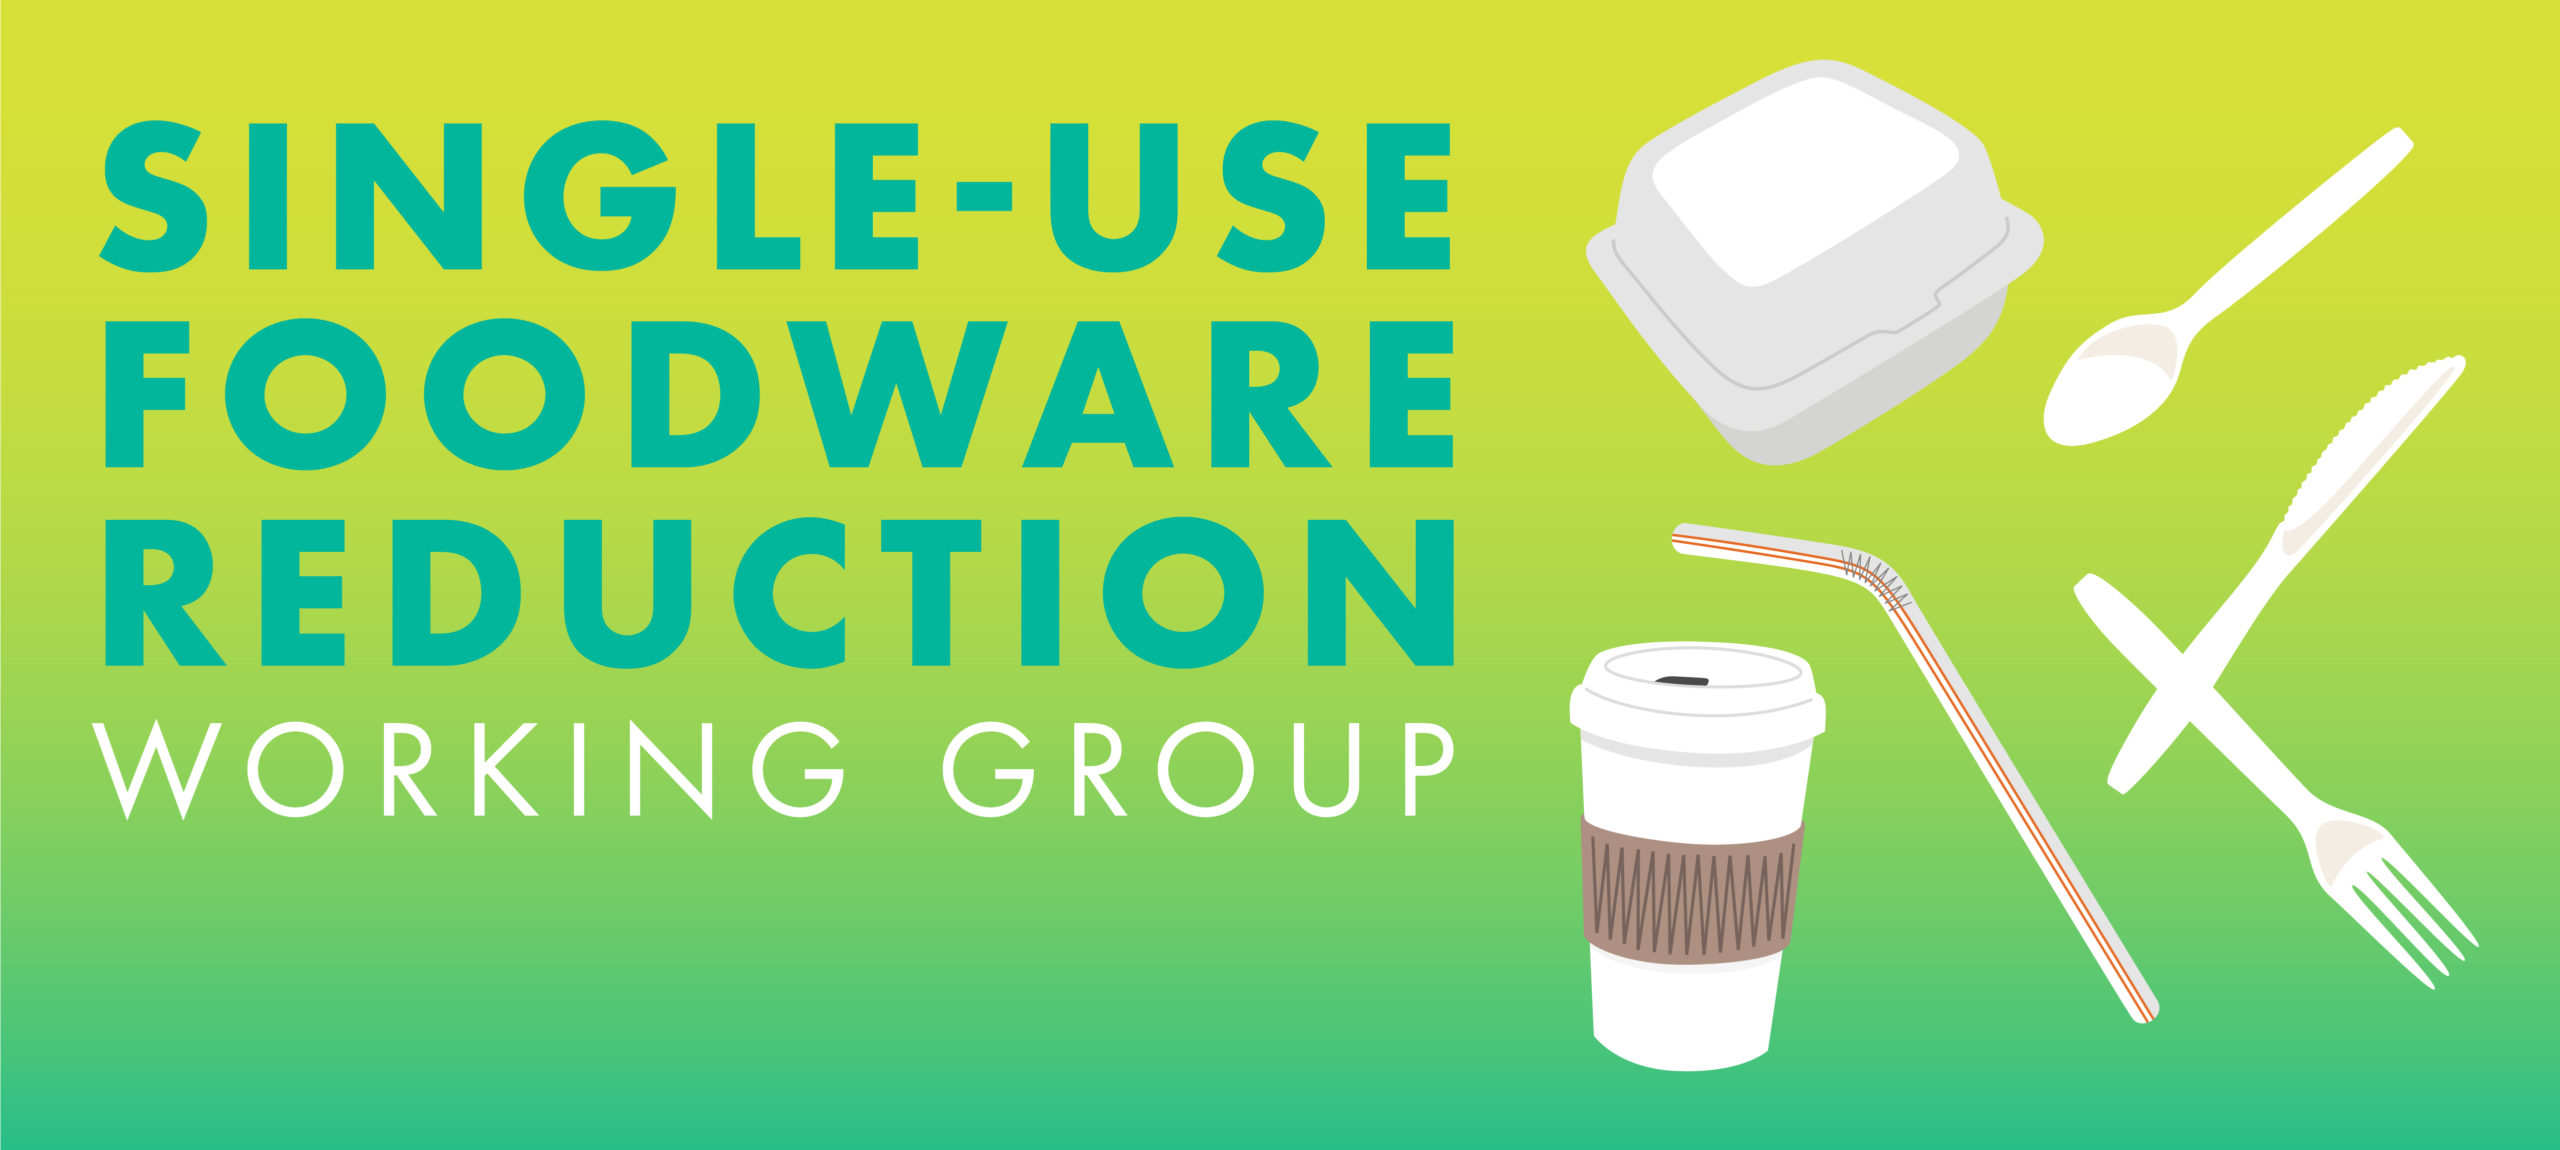 Single-Use Foodware Ordinance Working Group image